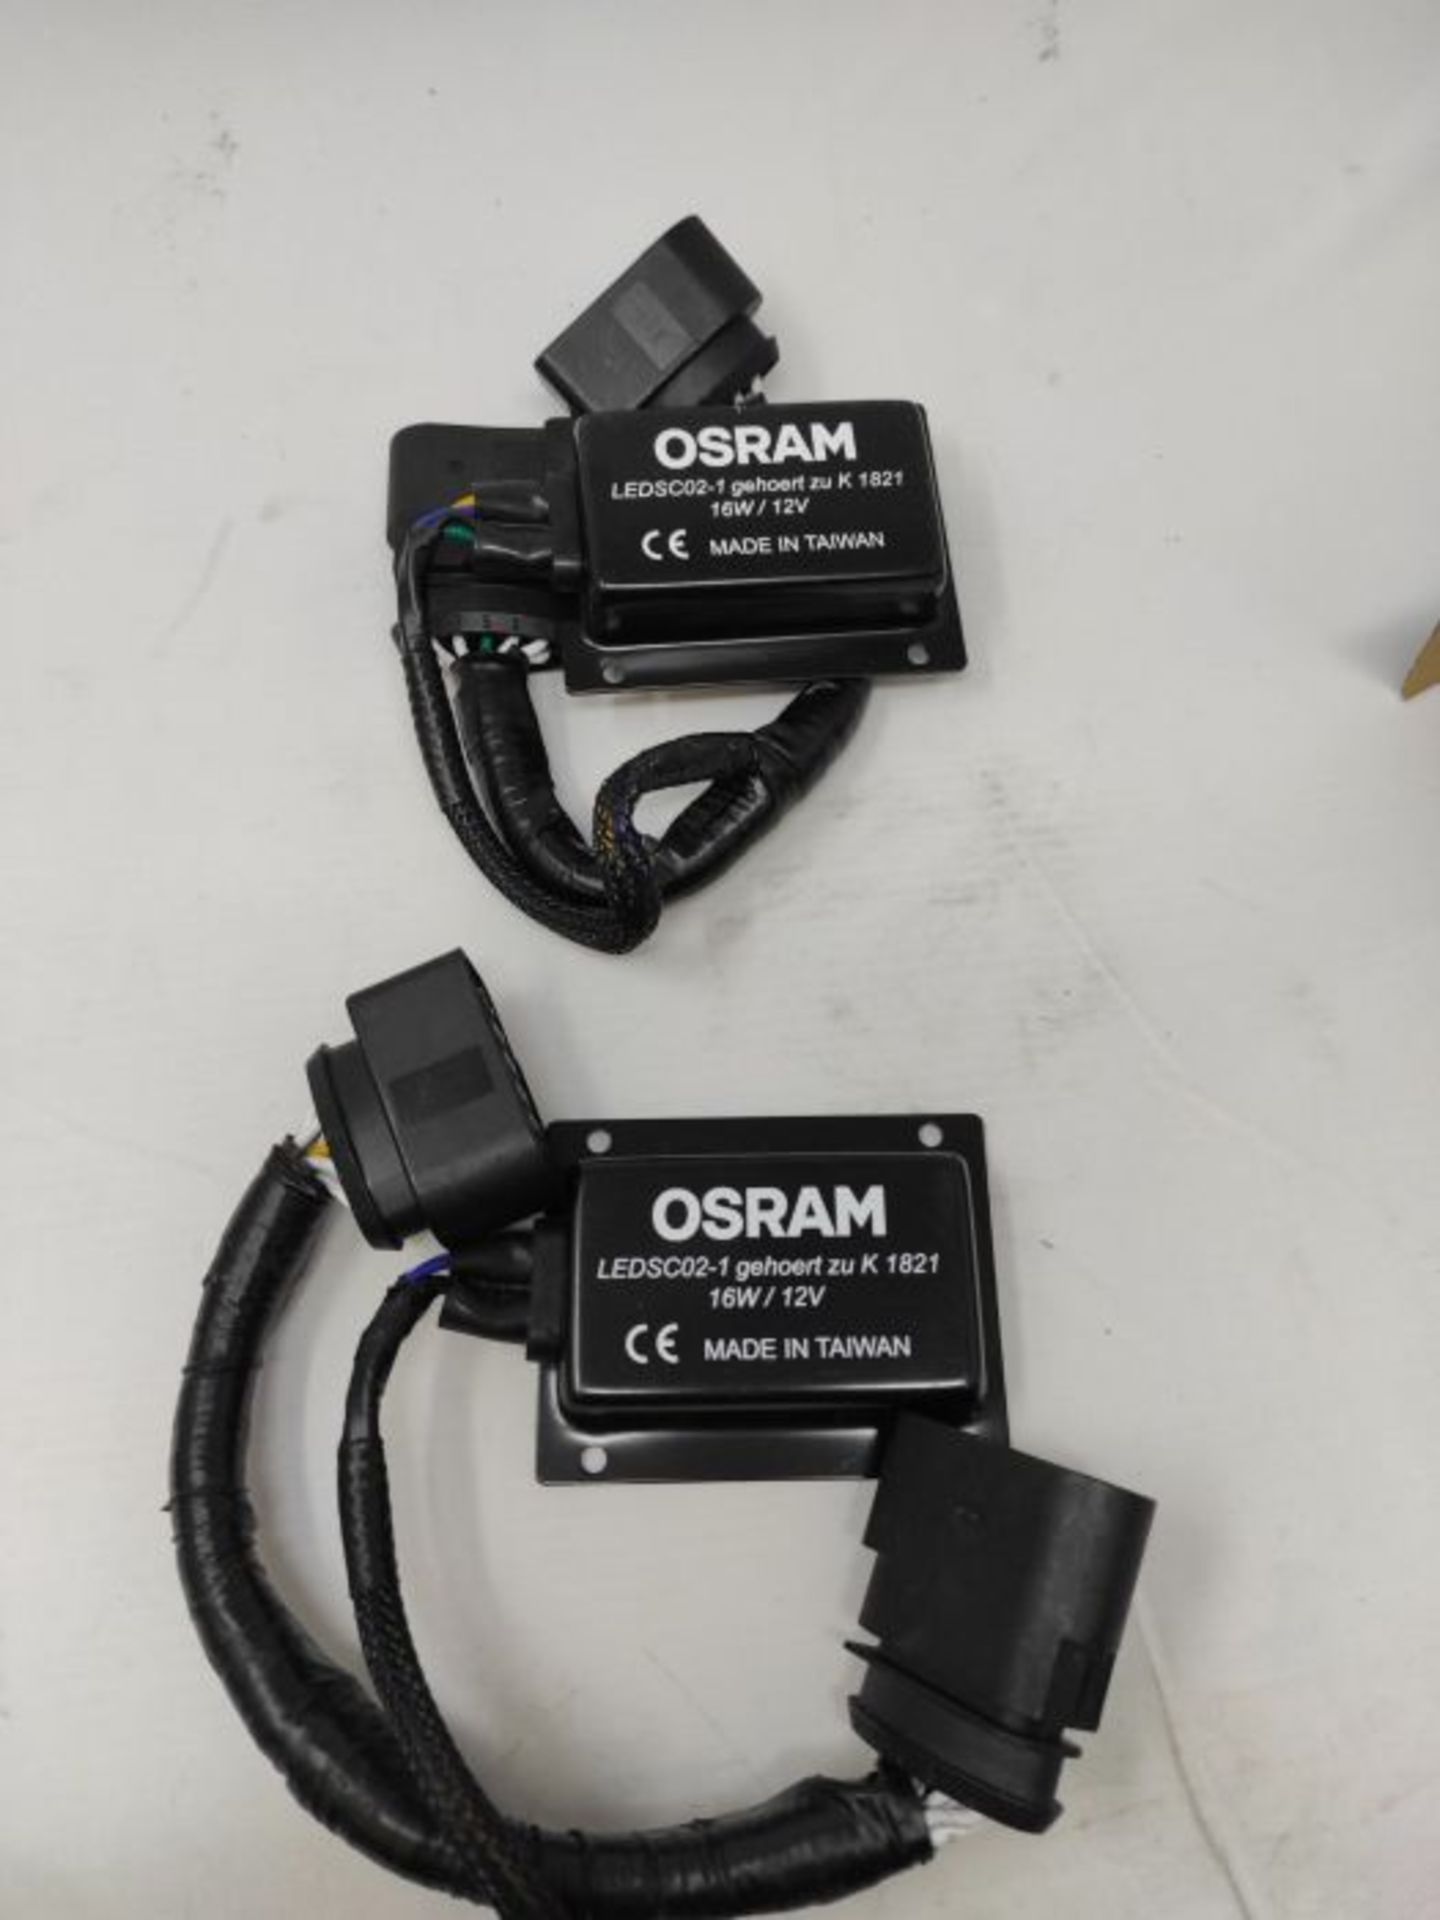 RRP £53.00 OSRAM LEDriving SMART CANBUS, LEDSC02-1, umgeht das Lampenausfallerkennungssystem Retr - Image 3 of 3